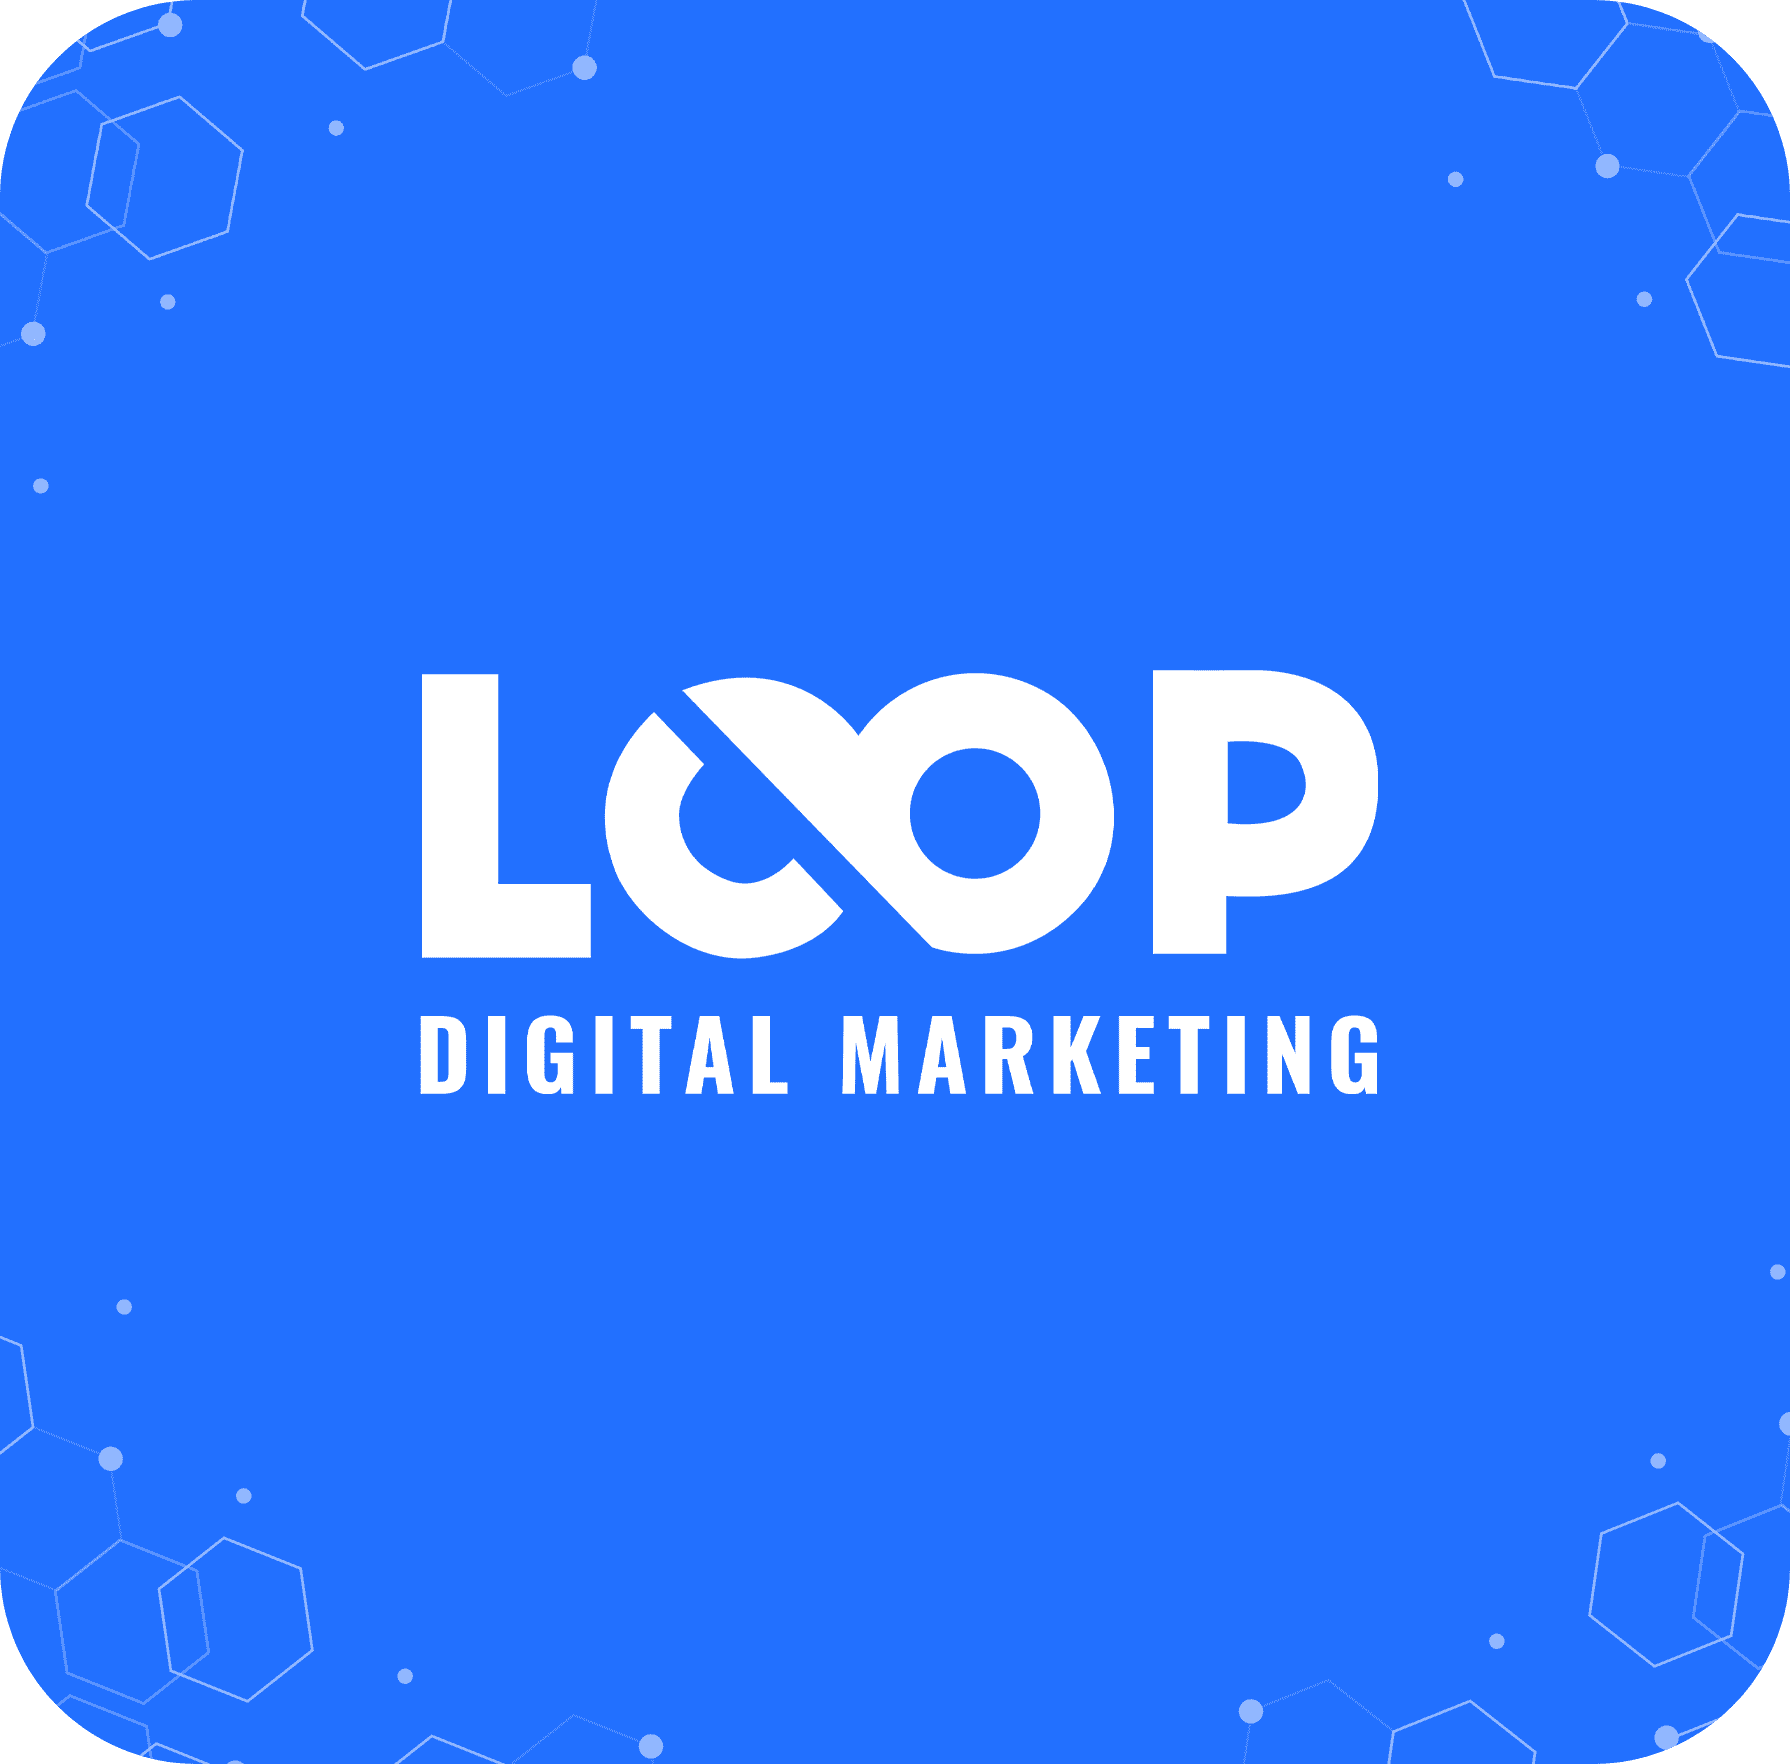 (c) Loopdigitalmarketing.com